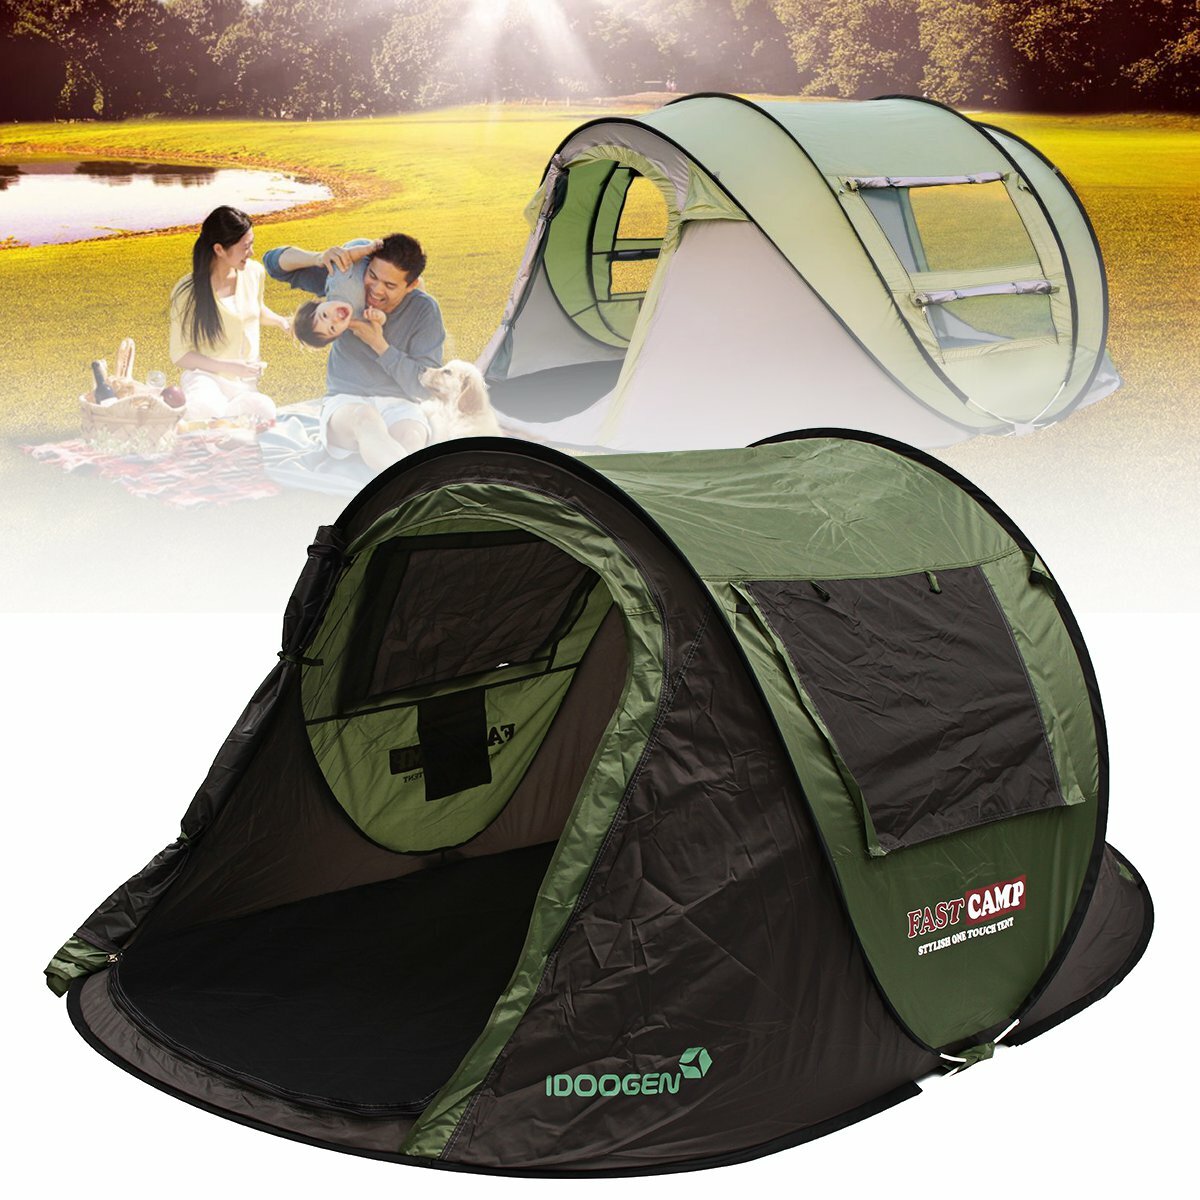 Outdoor-5-8-Personen-Automatik-Sofort-Popup-Zelt wasserdichtes Sonnenschutzdach Regenschutz-Campingunterstand.